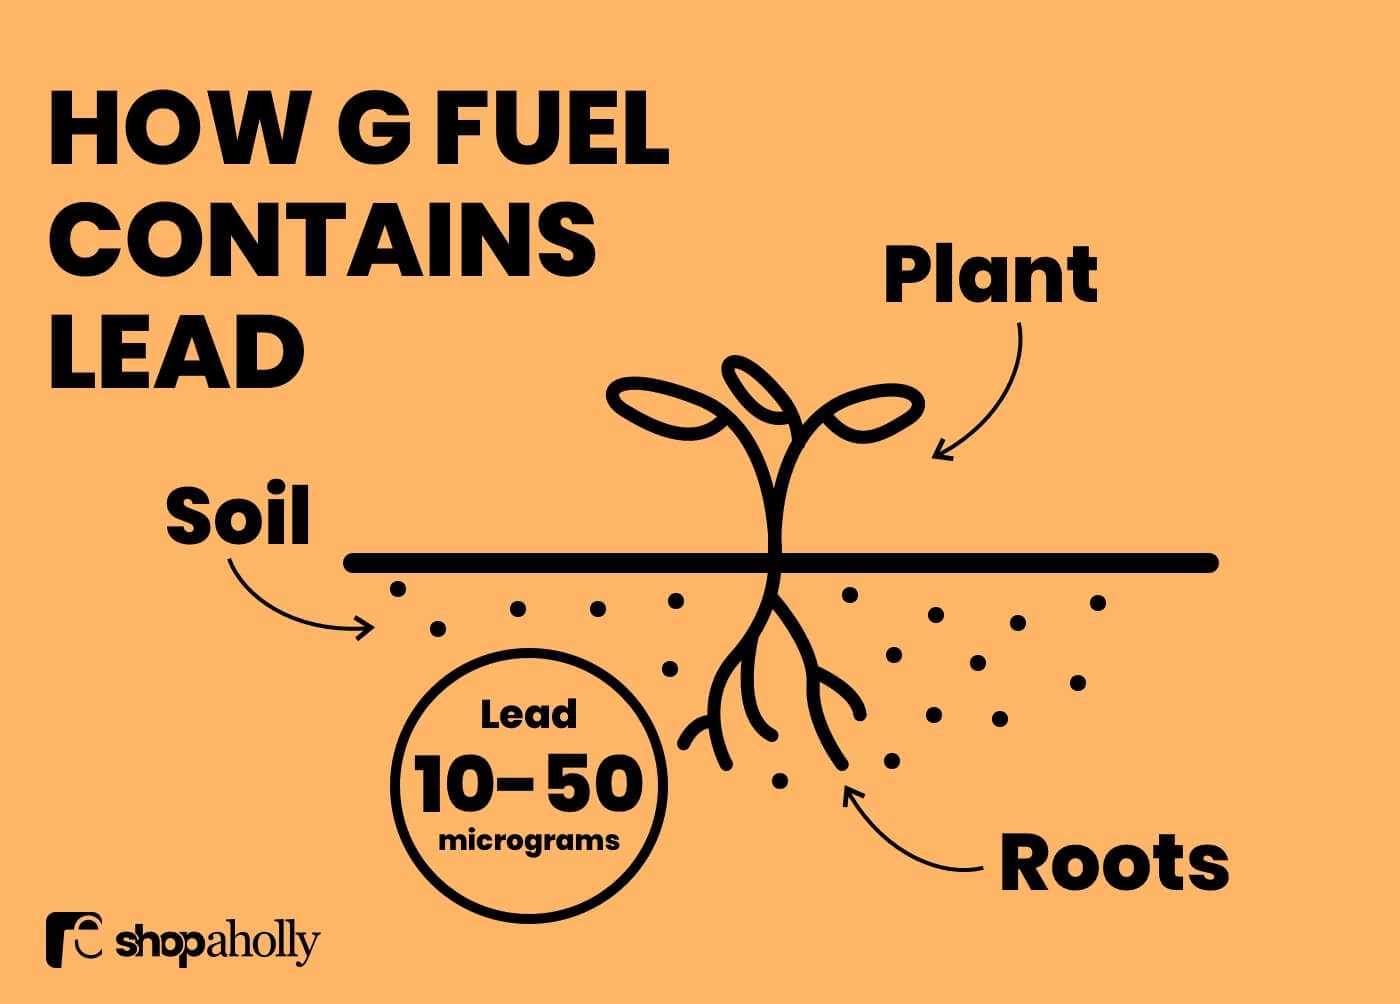 Lead contents in soil